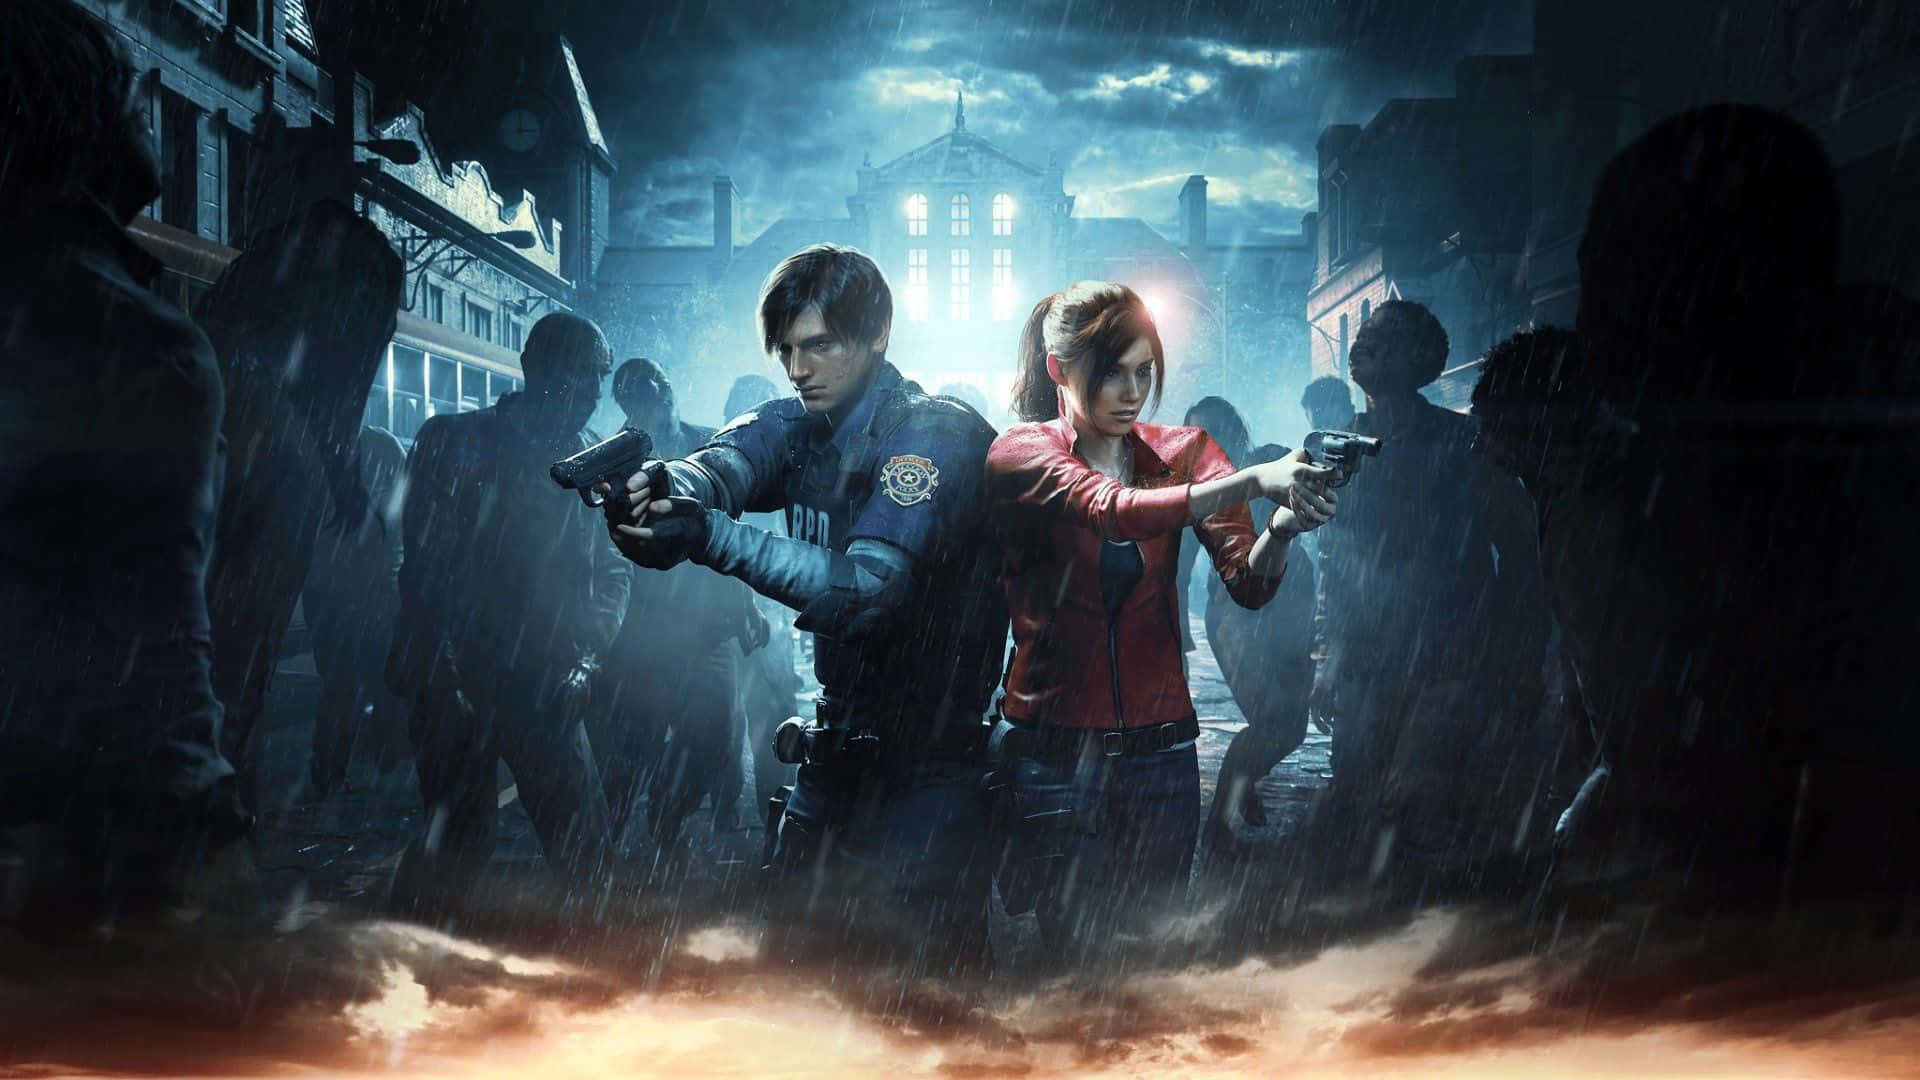 Fondode Pantalla De Resident Evil 2 De 1920x1080, Leon Y Claire Rodeados De Zombis.